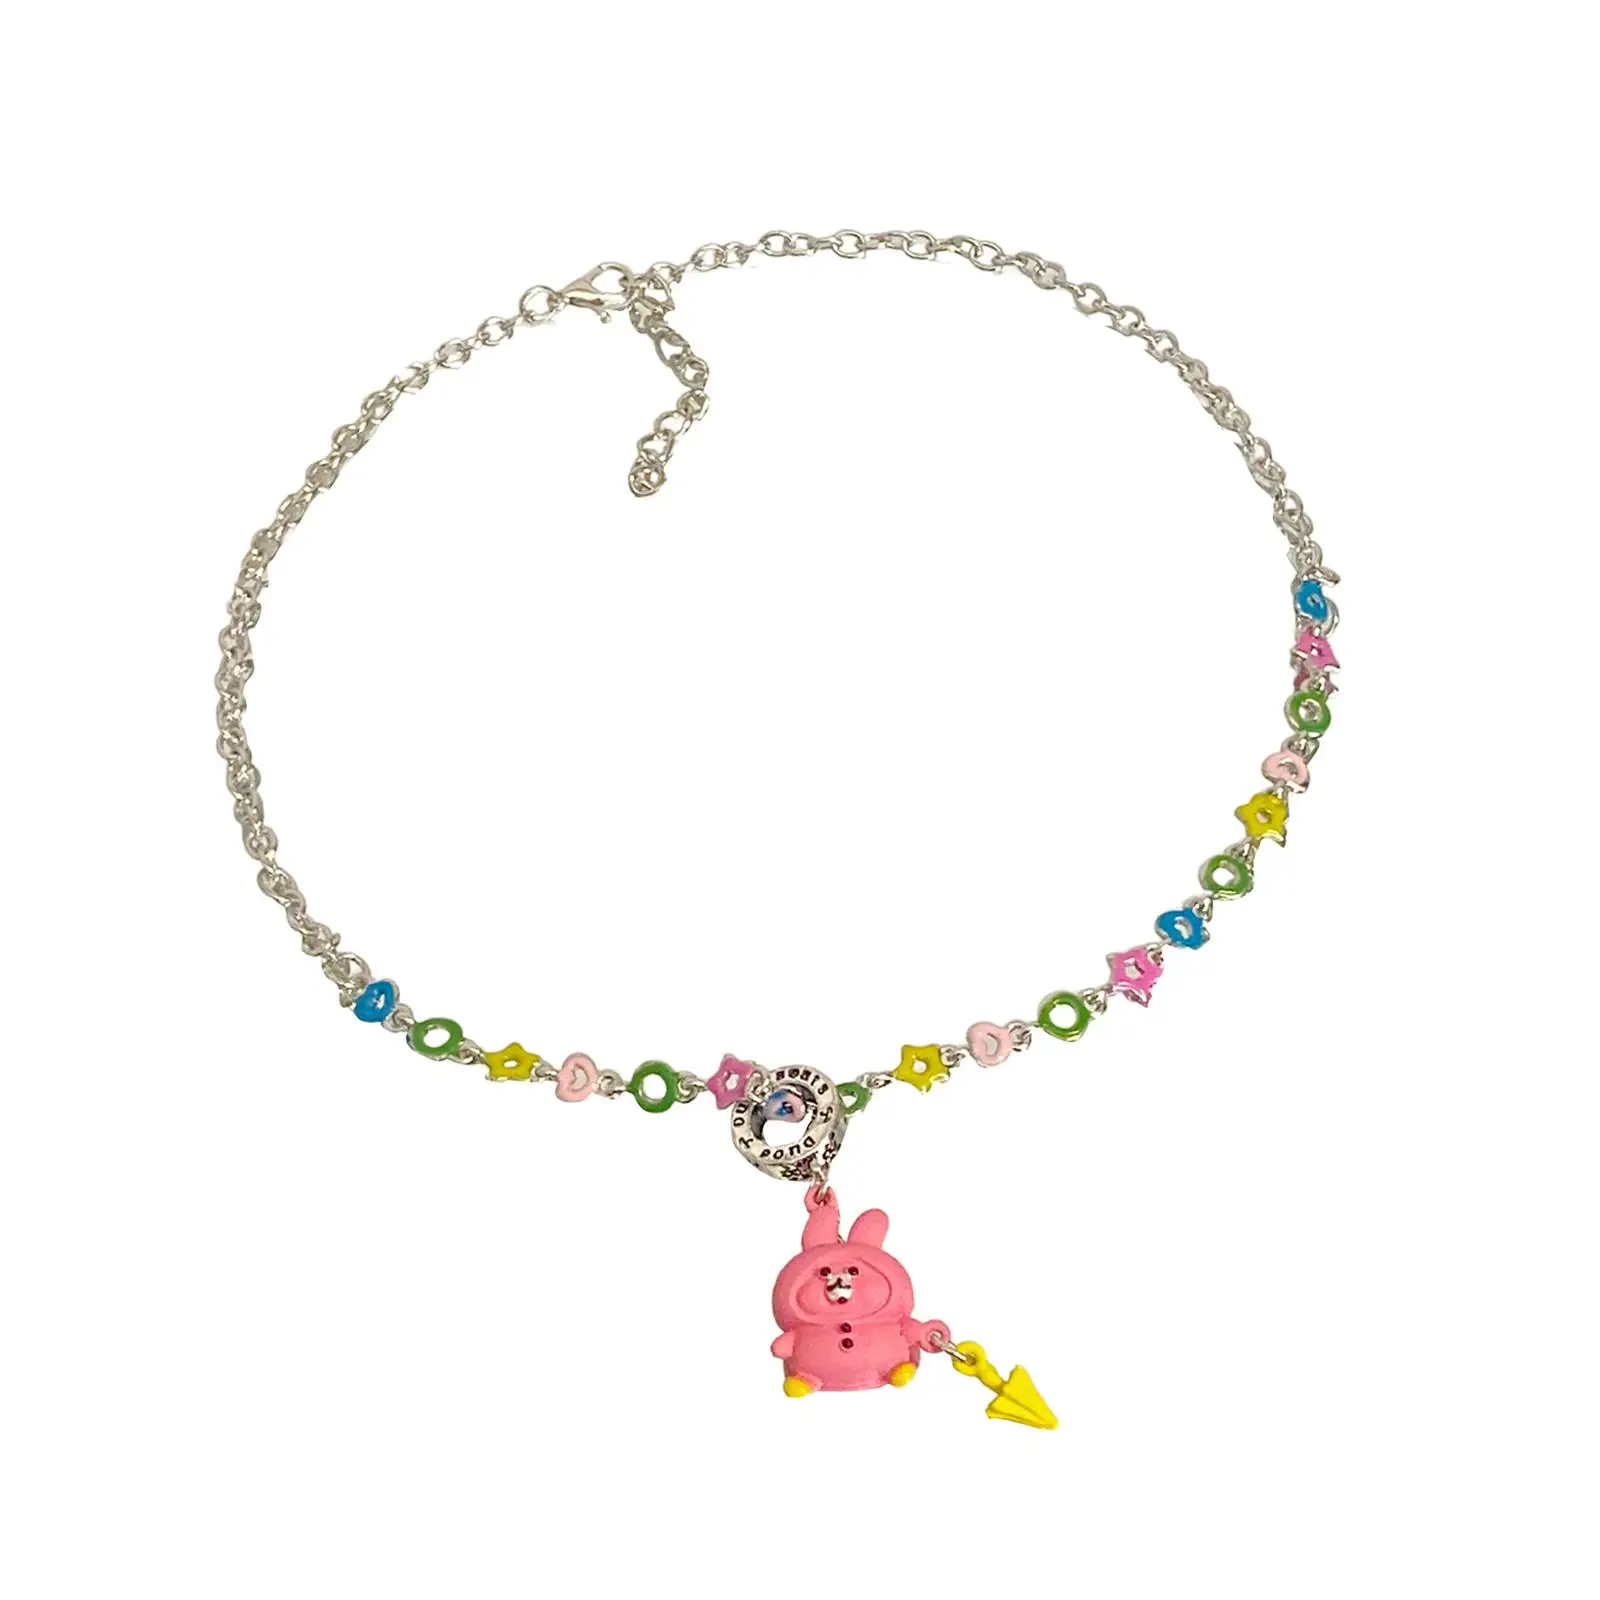 Colorful Choker Necklace Stylish Boho Cartoon Rabbit Pendant Necklace for Graduation Anniversary Beach Birthday Gift Party